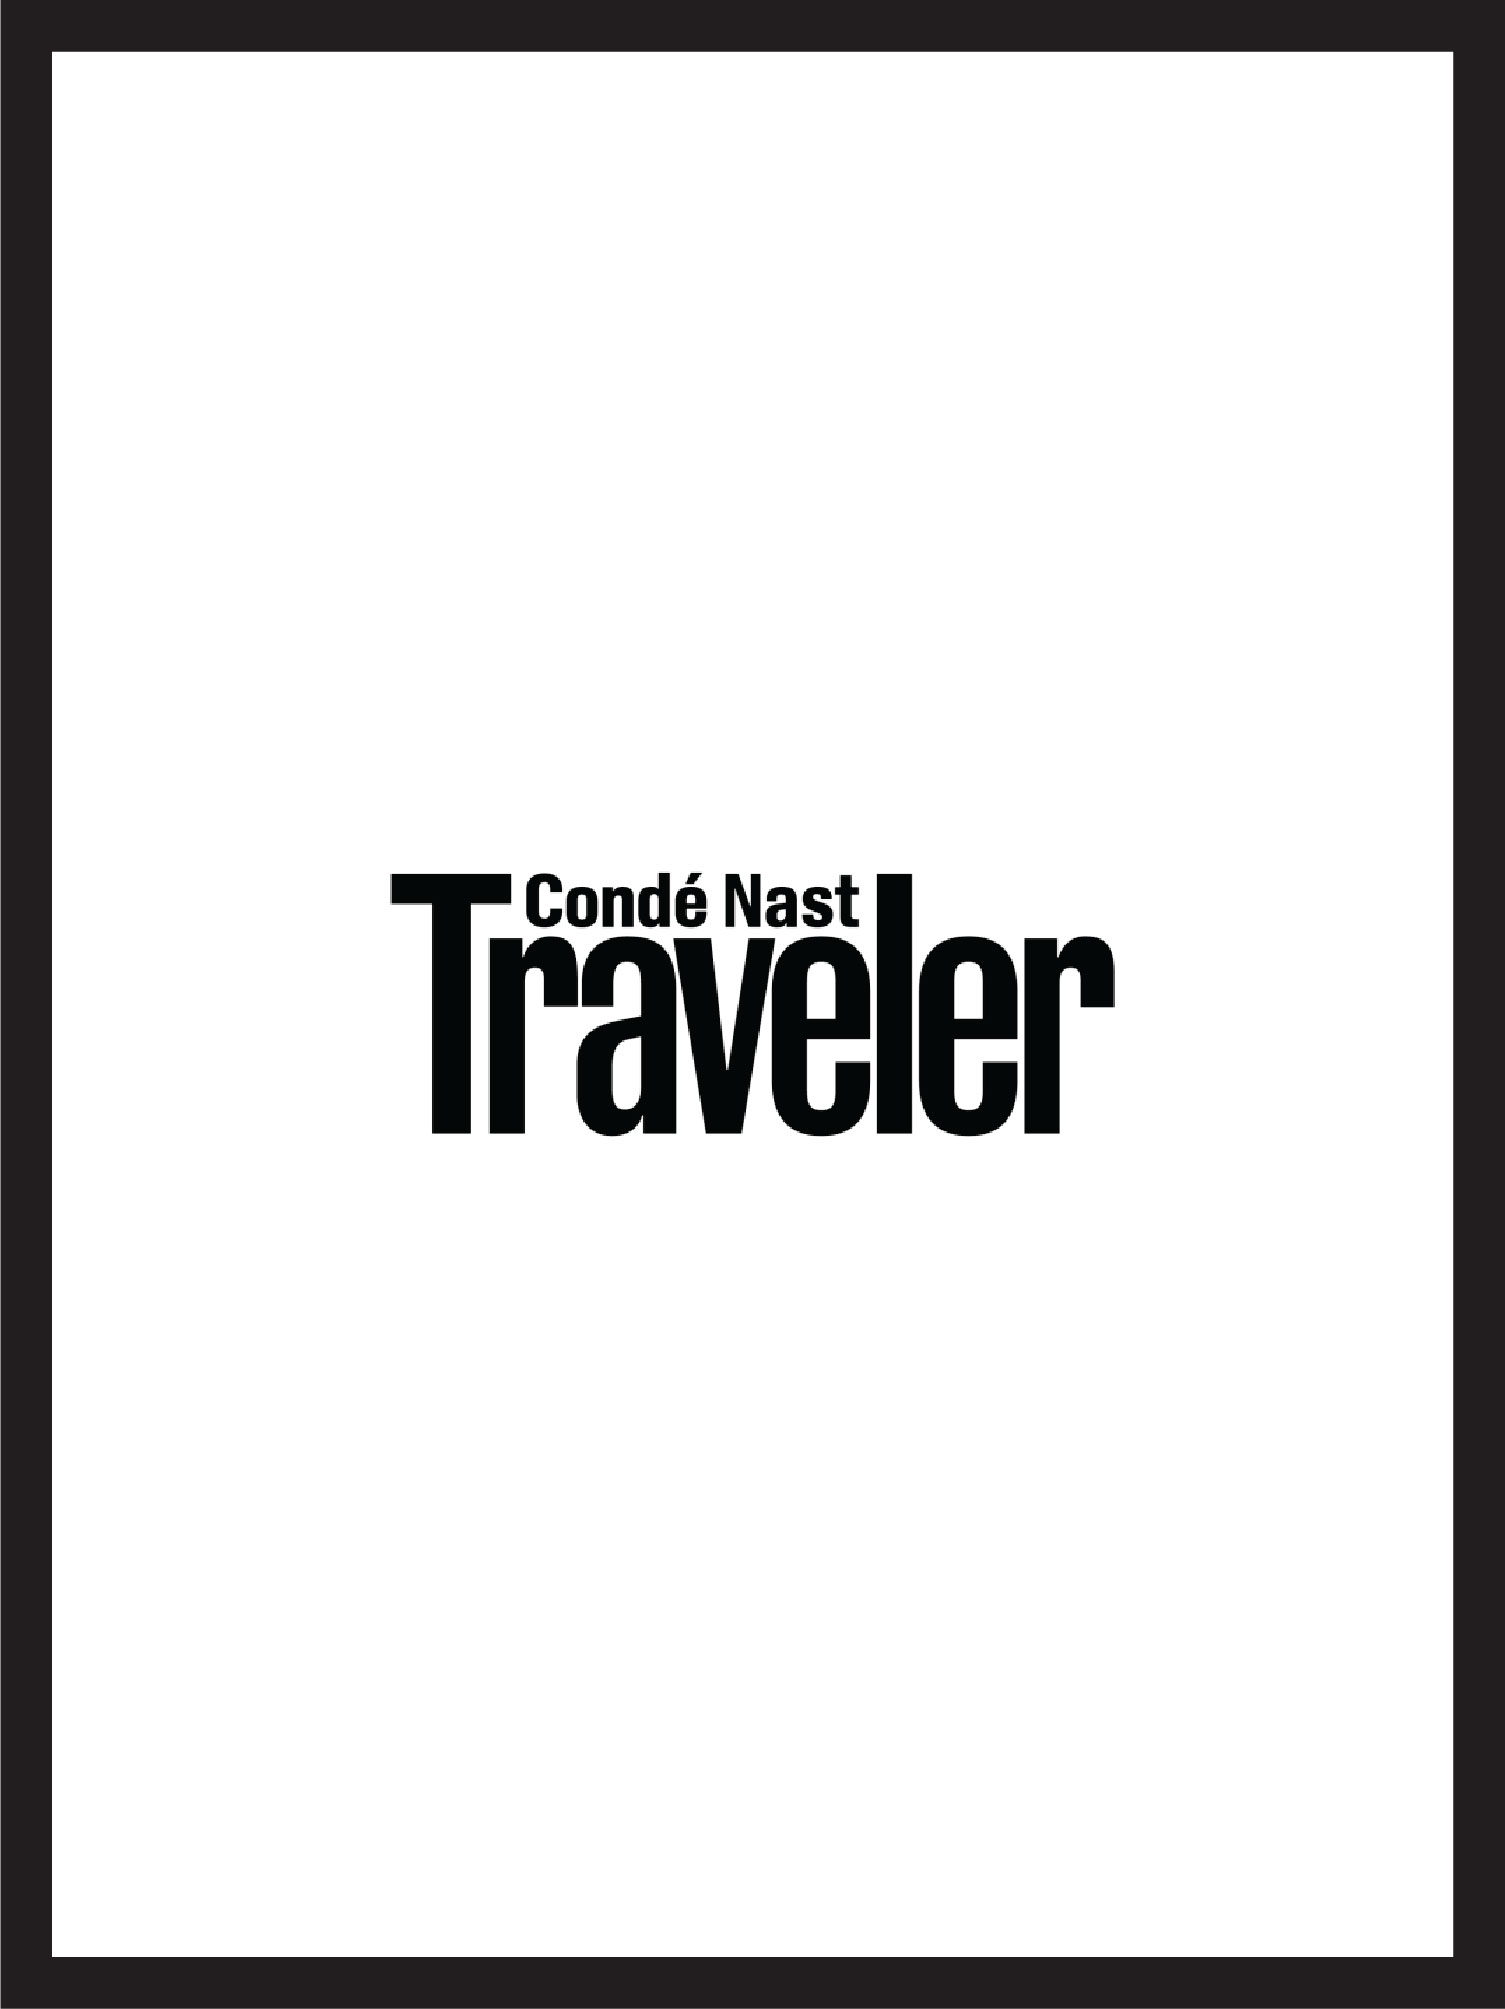 logo of the magazine conde nast traveller